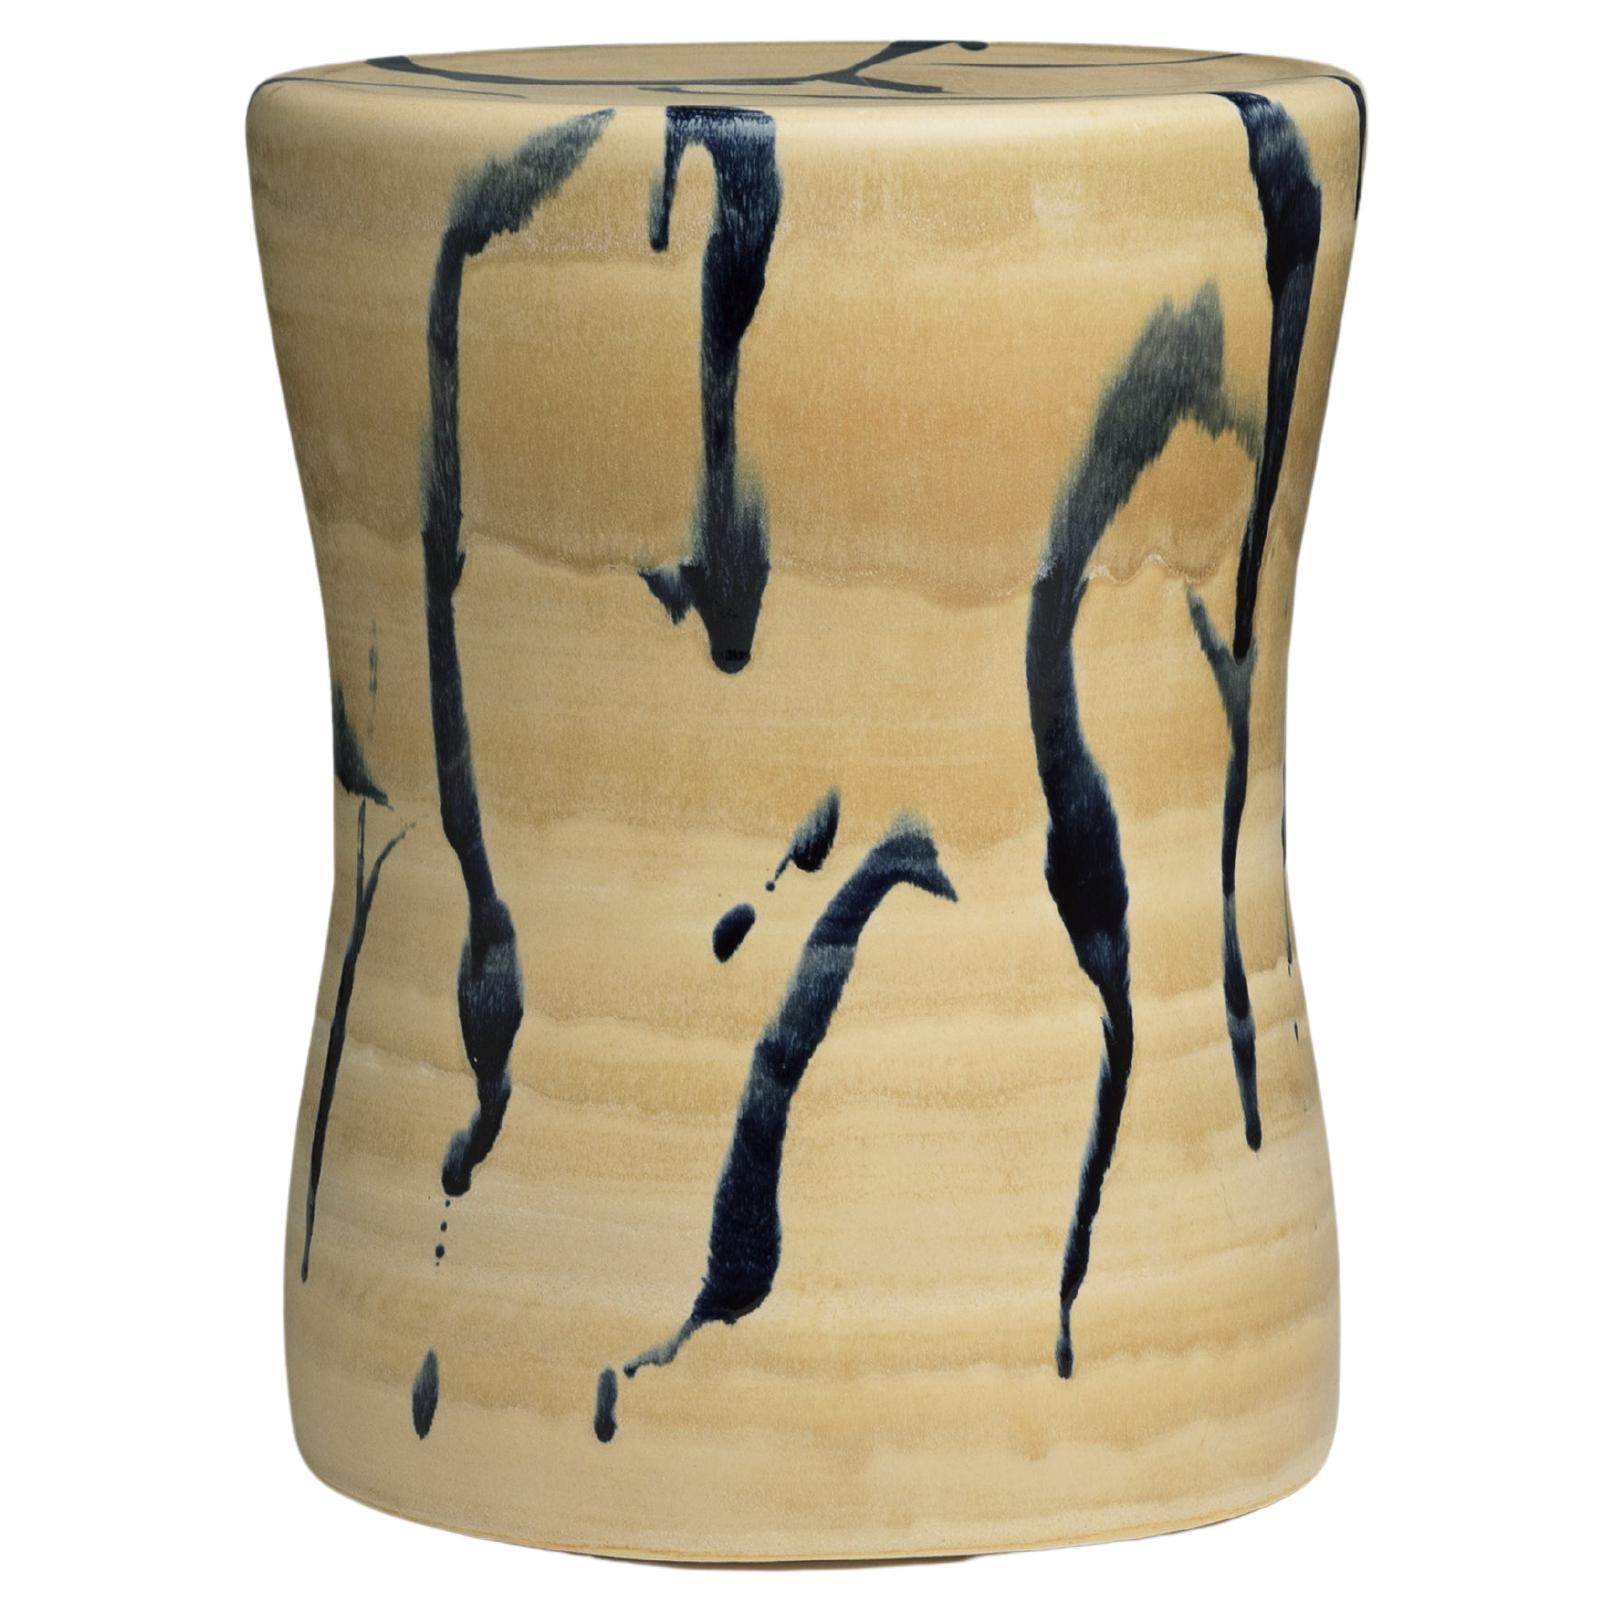 ST38 Glazed Stoneware Stool by Pascale Girardin